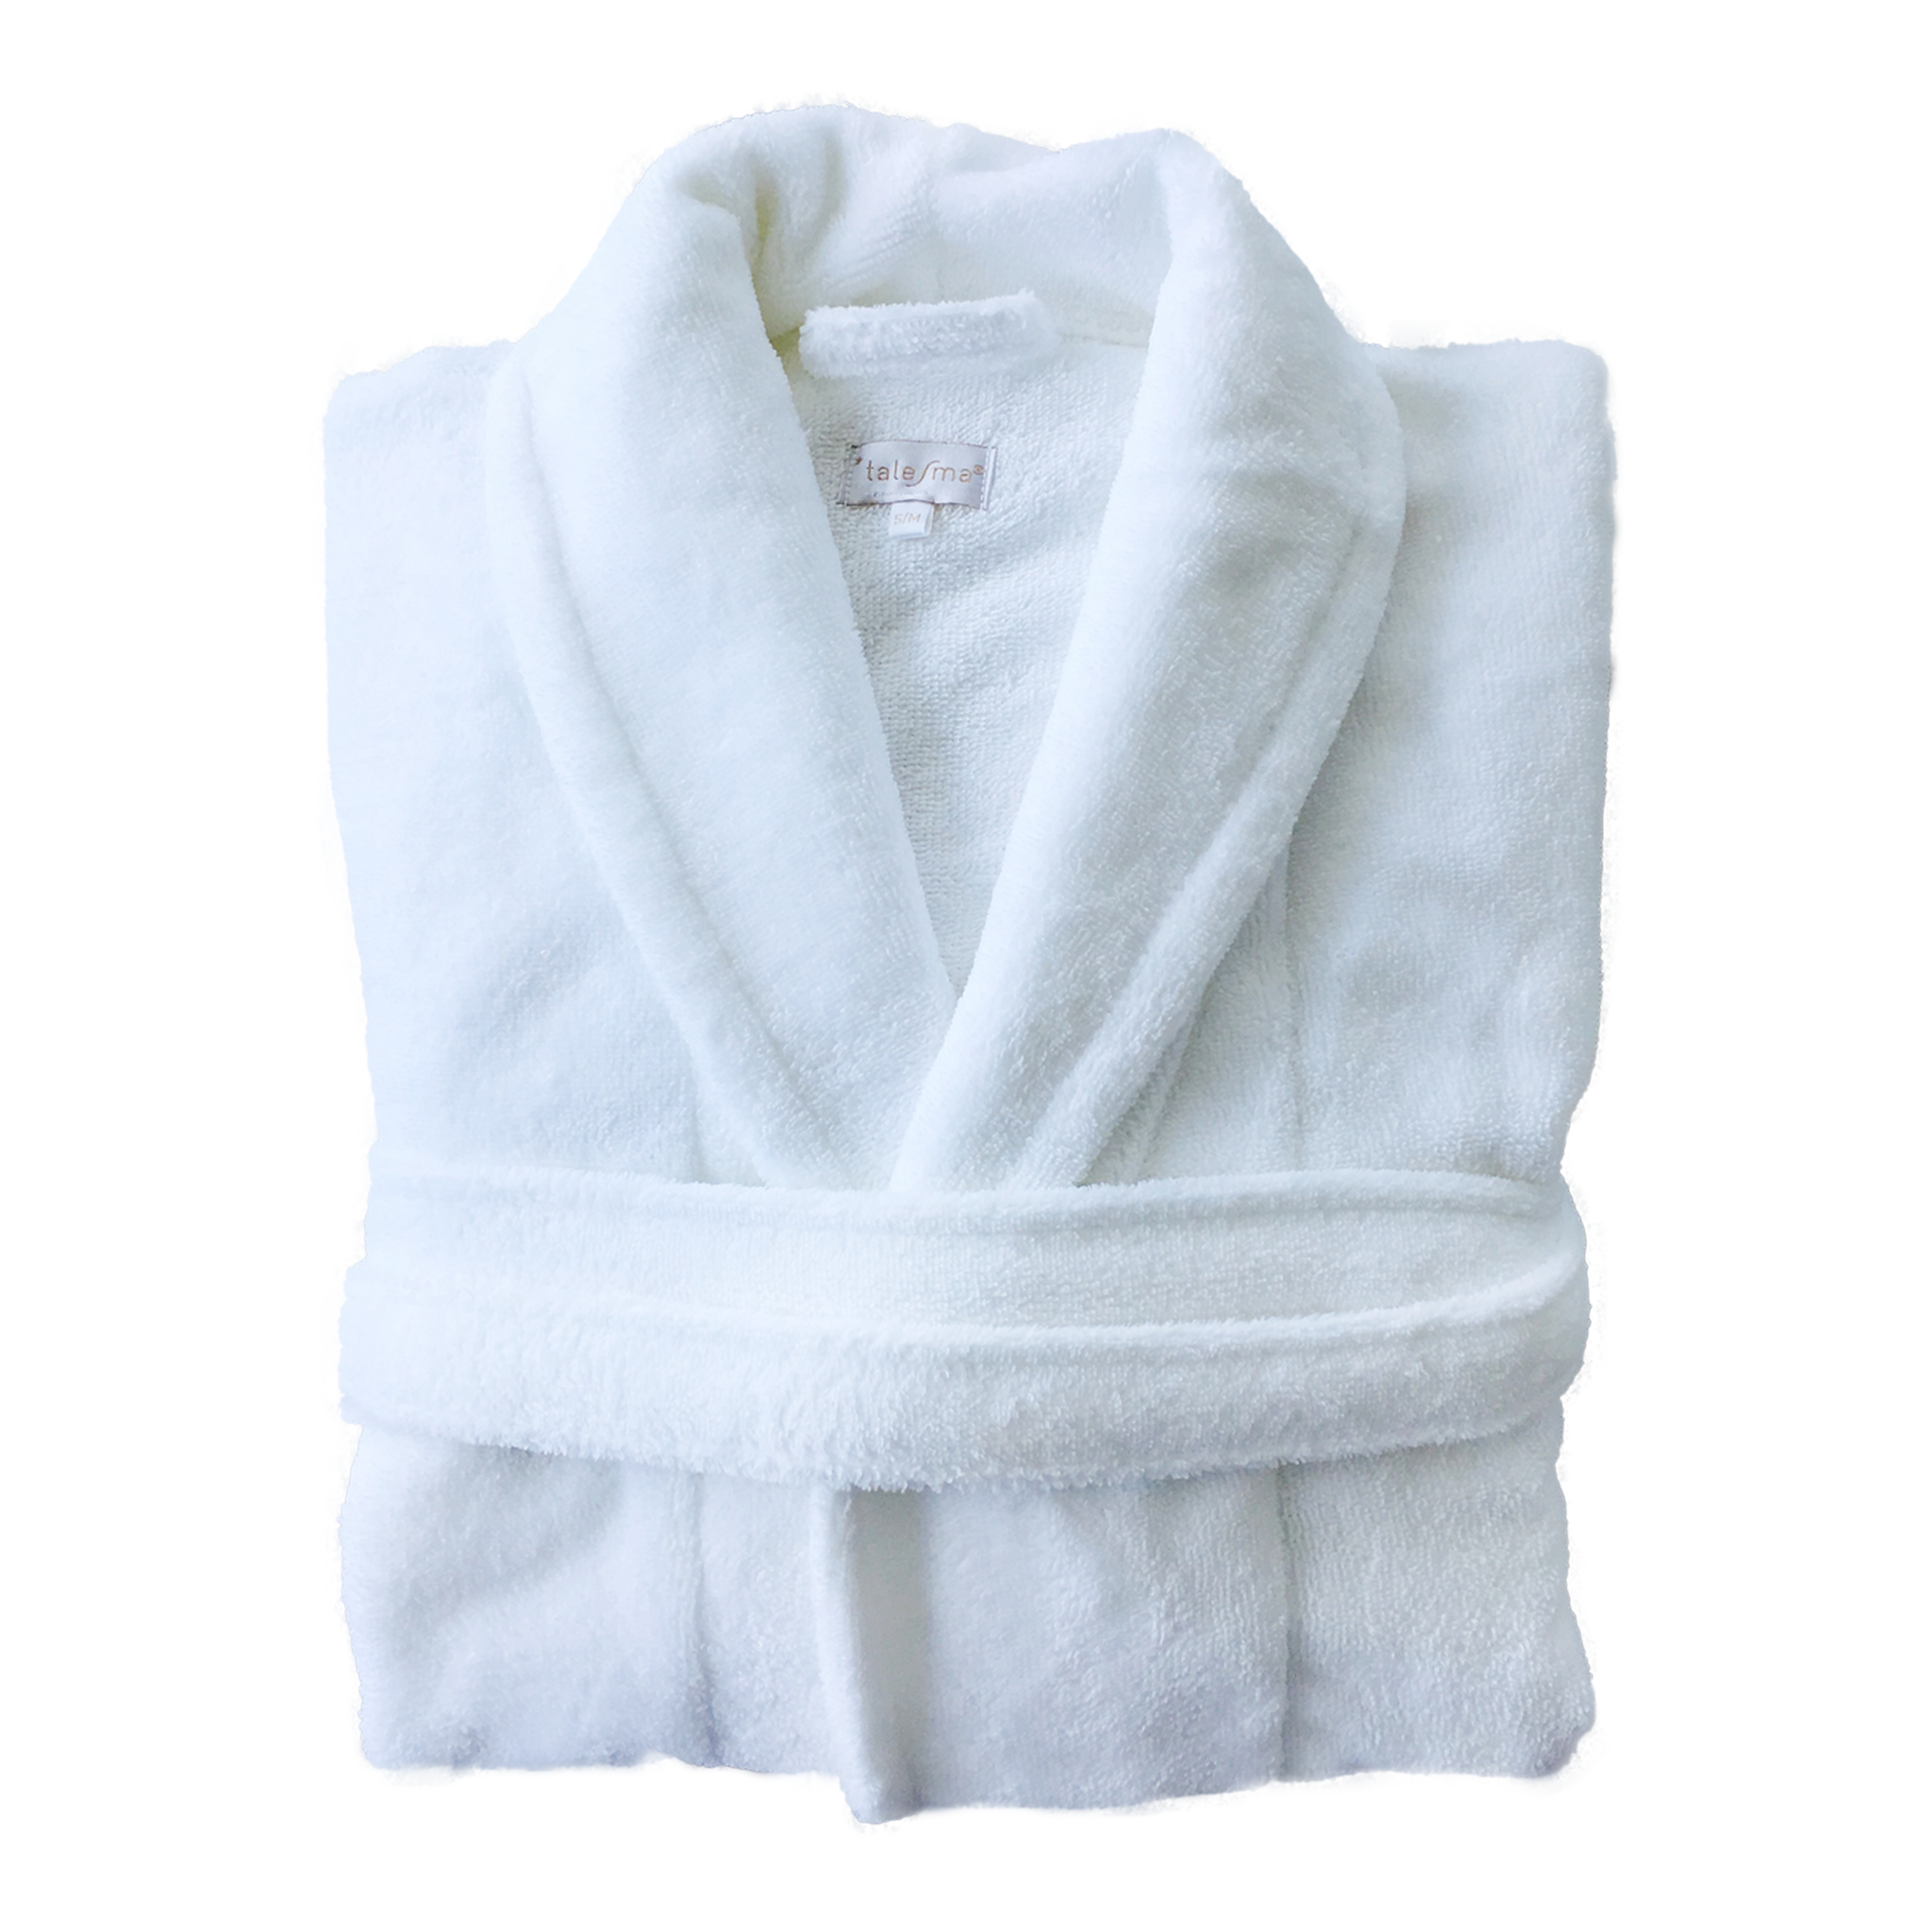 Bathrobe Towel PNG Free Download